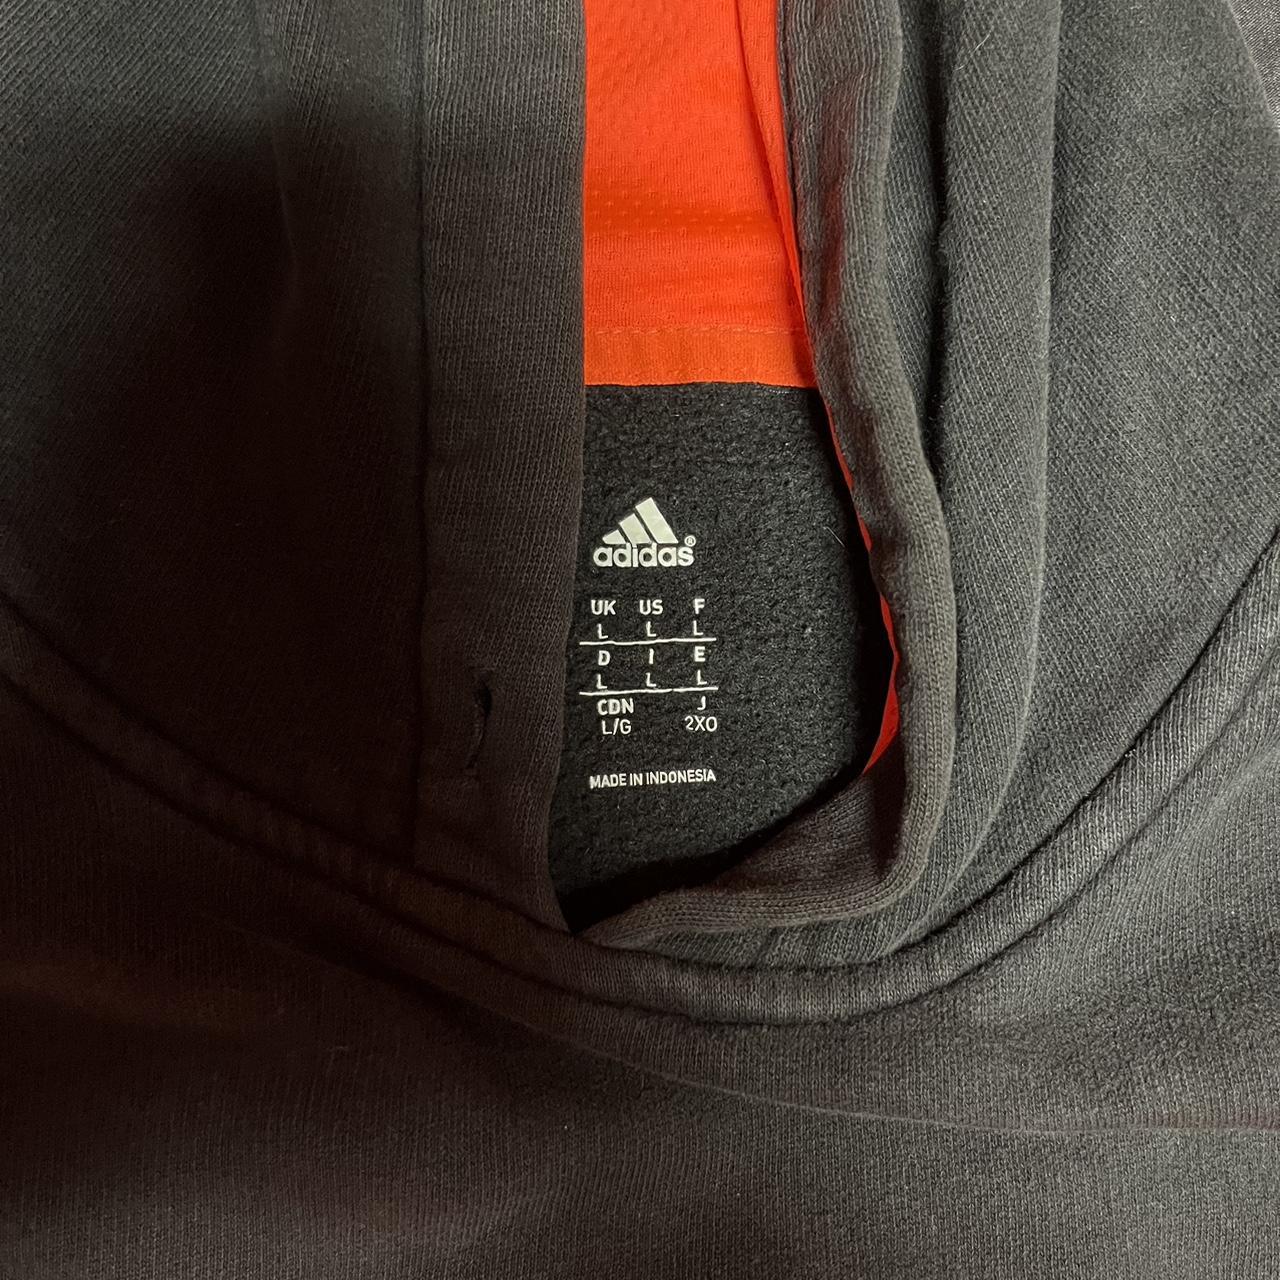 Adidas black and orange/red logo hoodie:Large (small... - Depop